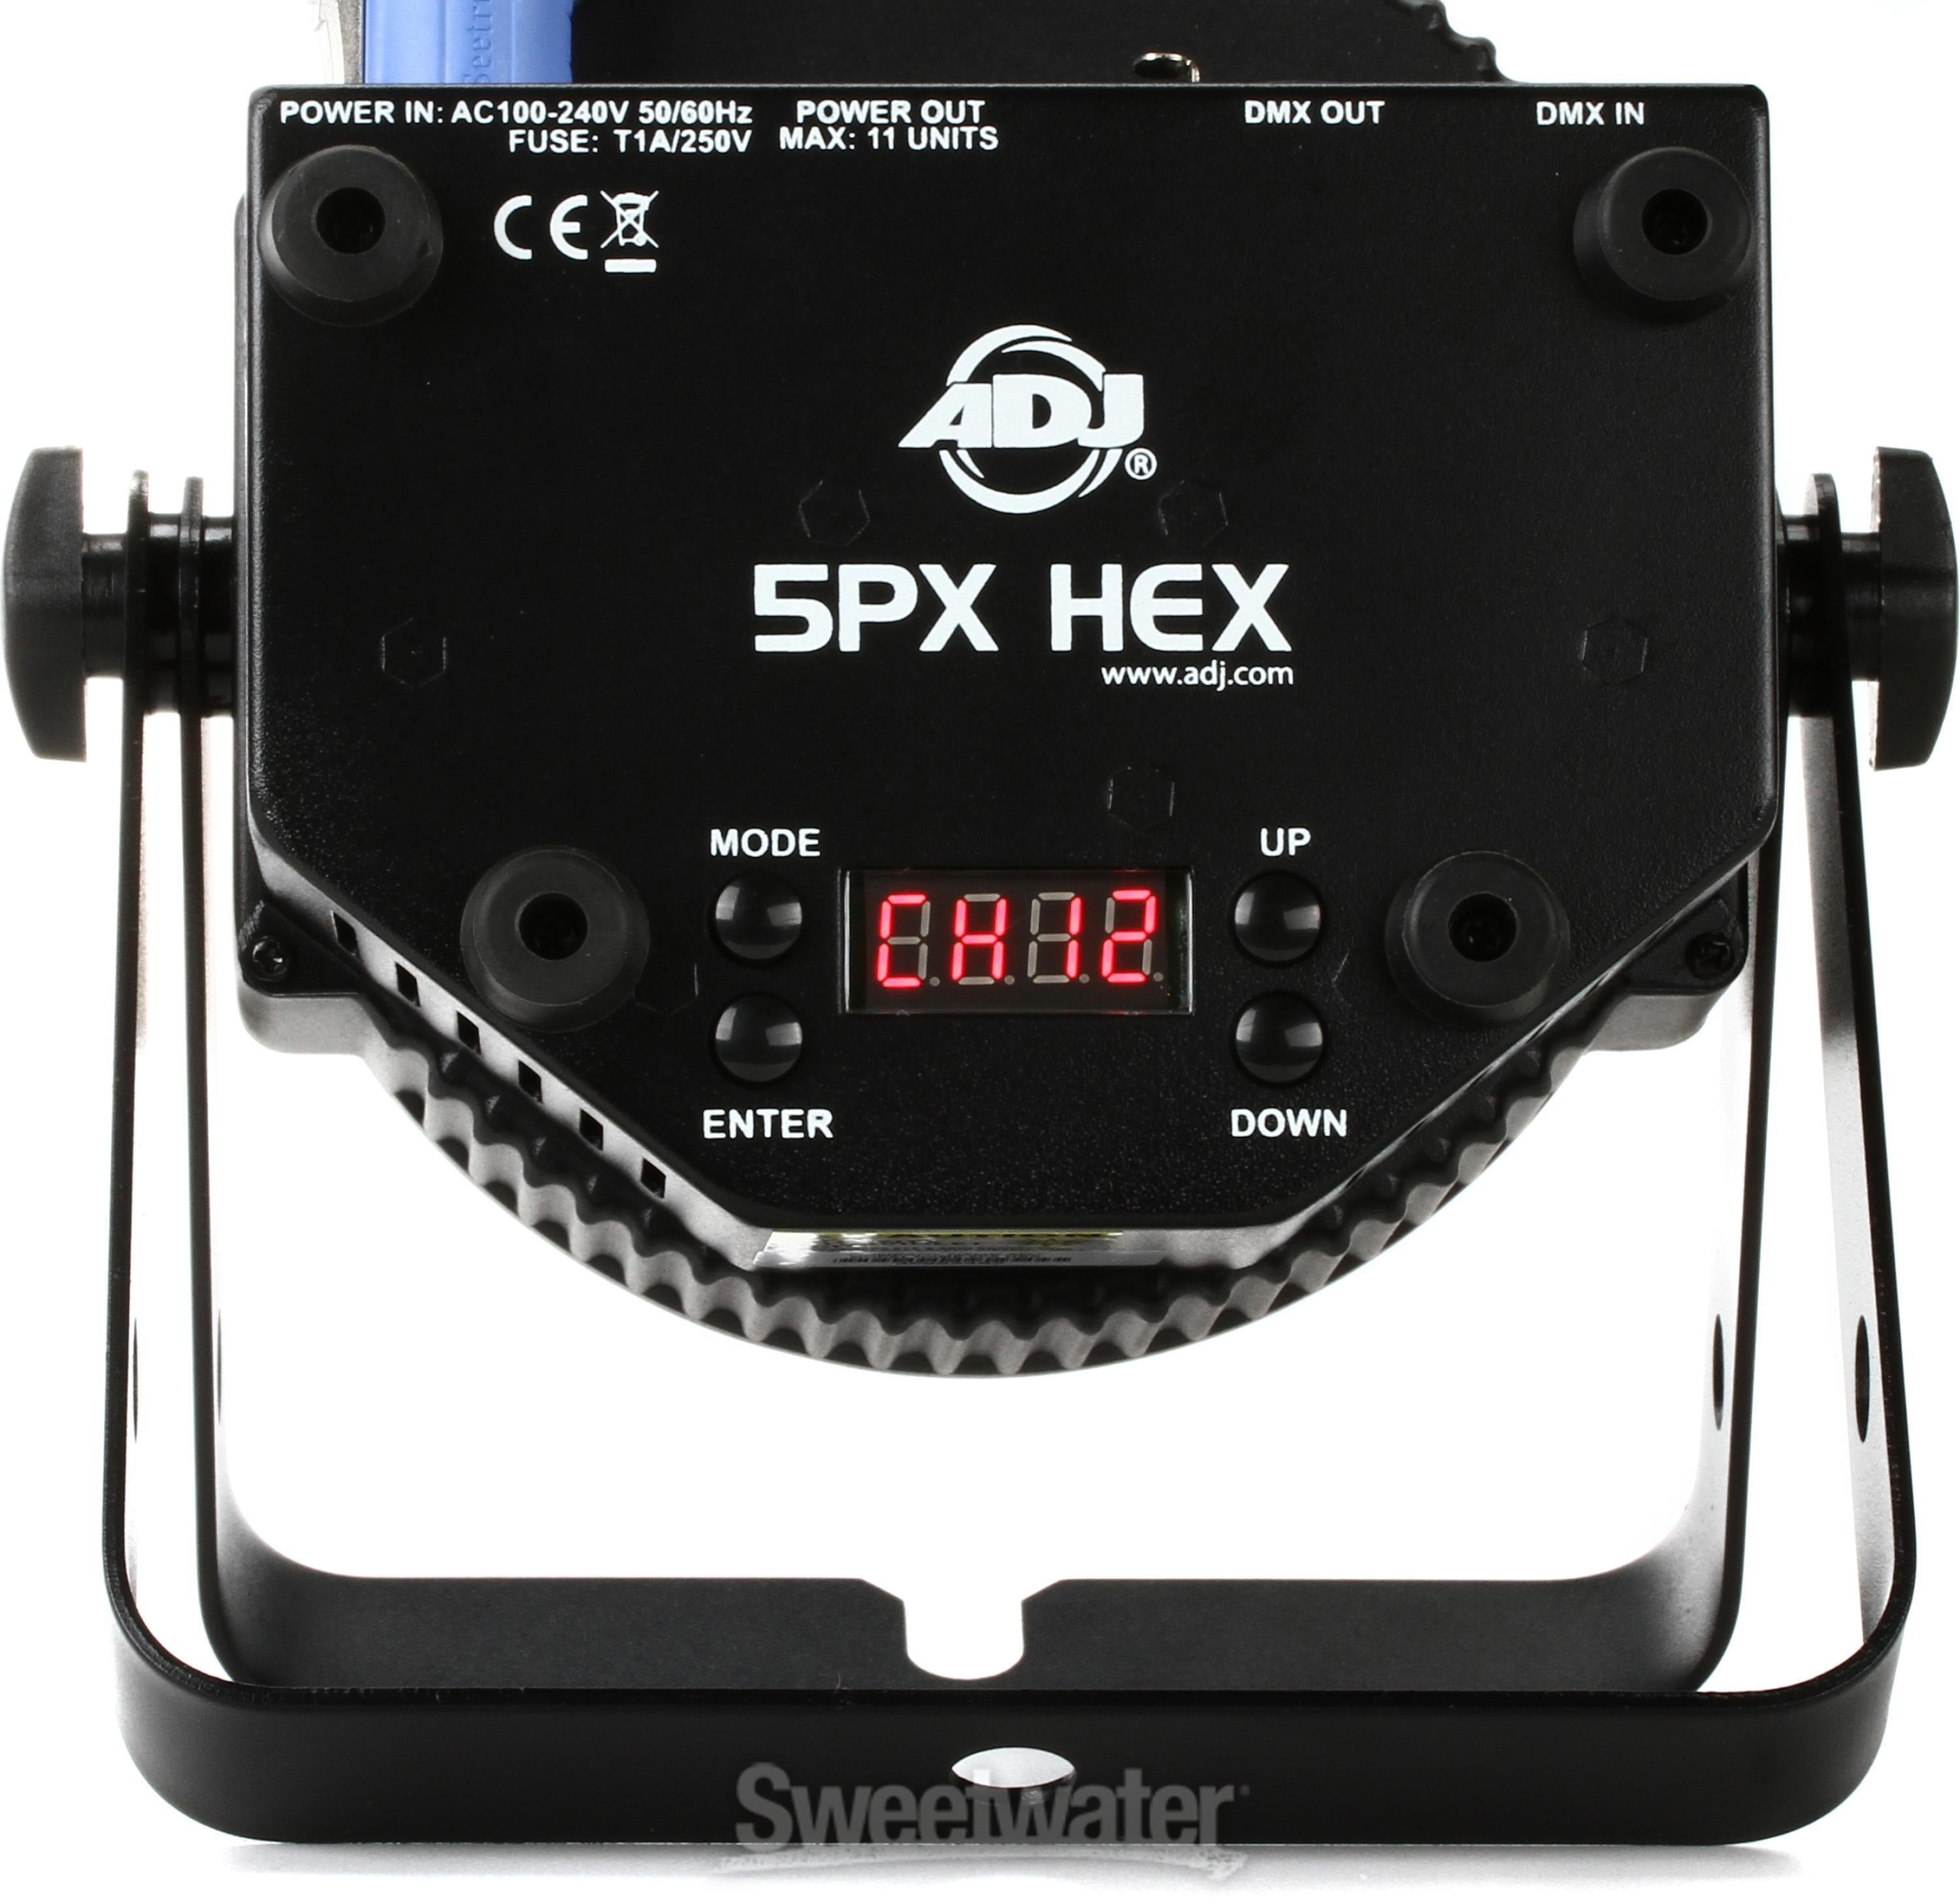 ADJ 5PX HEX RGBAW+UV LED Par